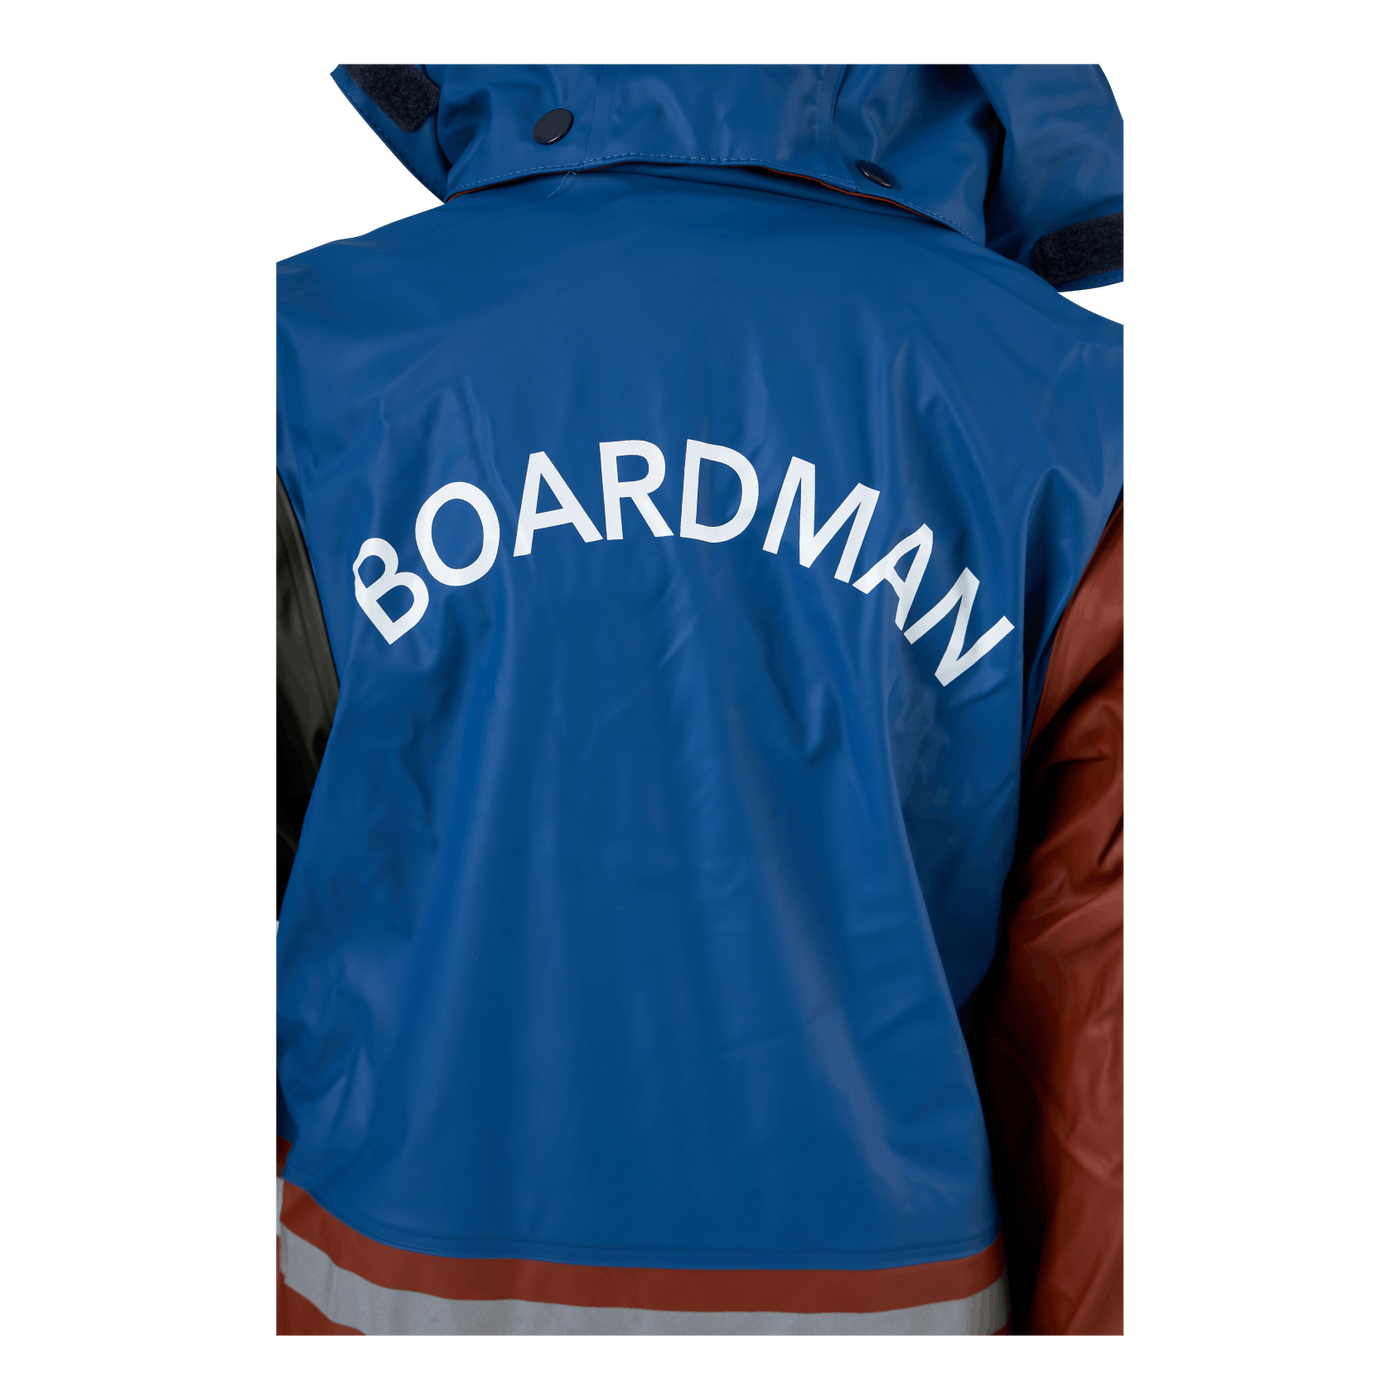 Boardman Kd Mult Set Classic Blue